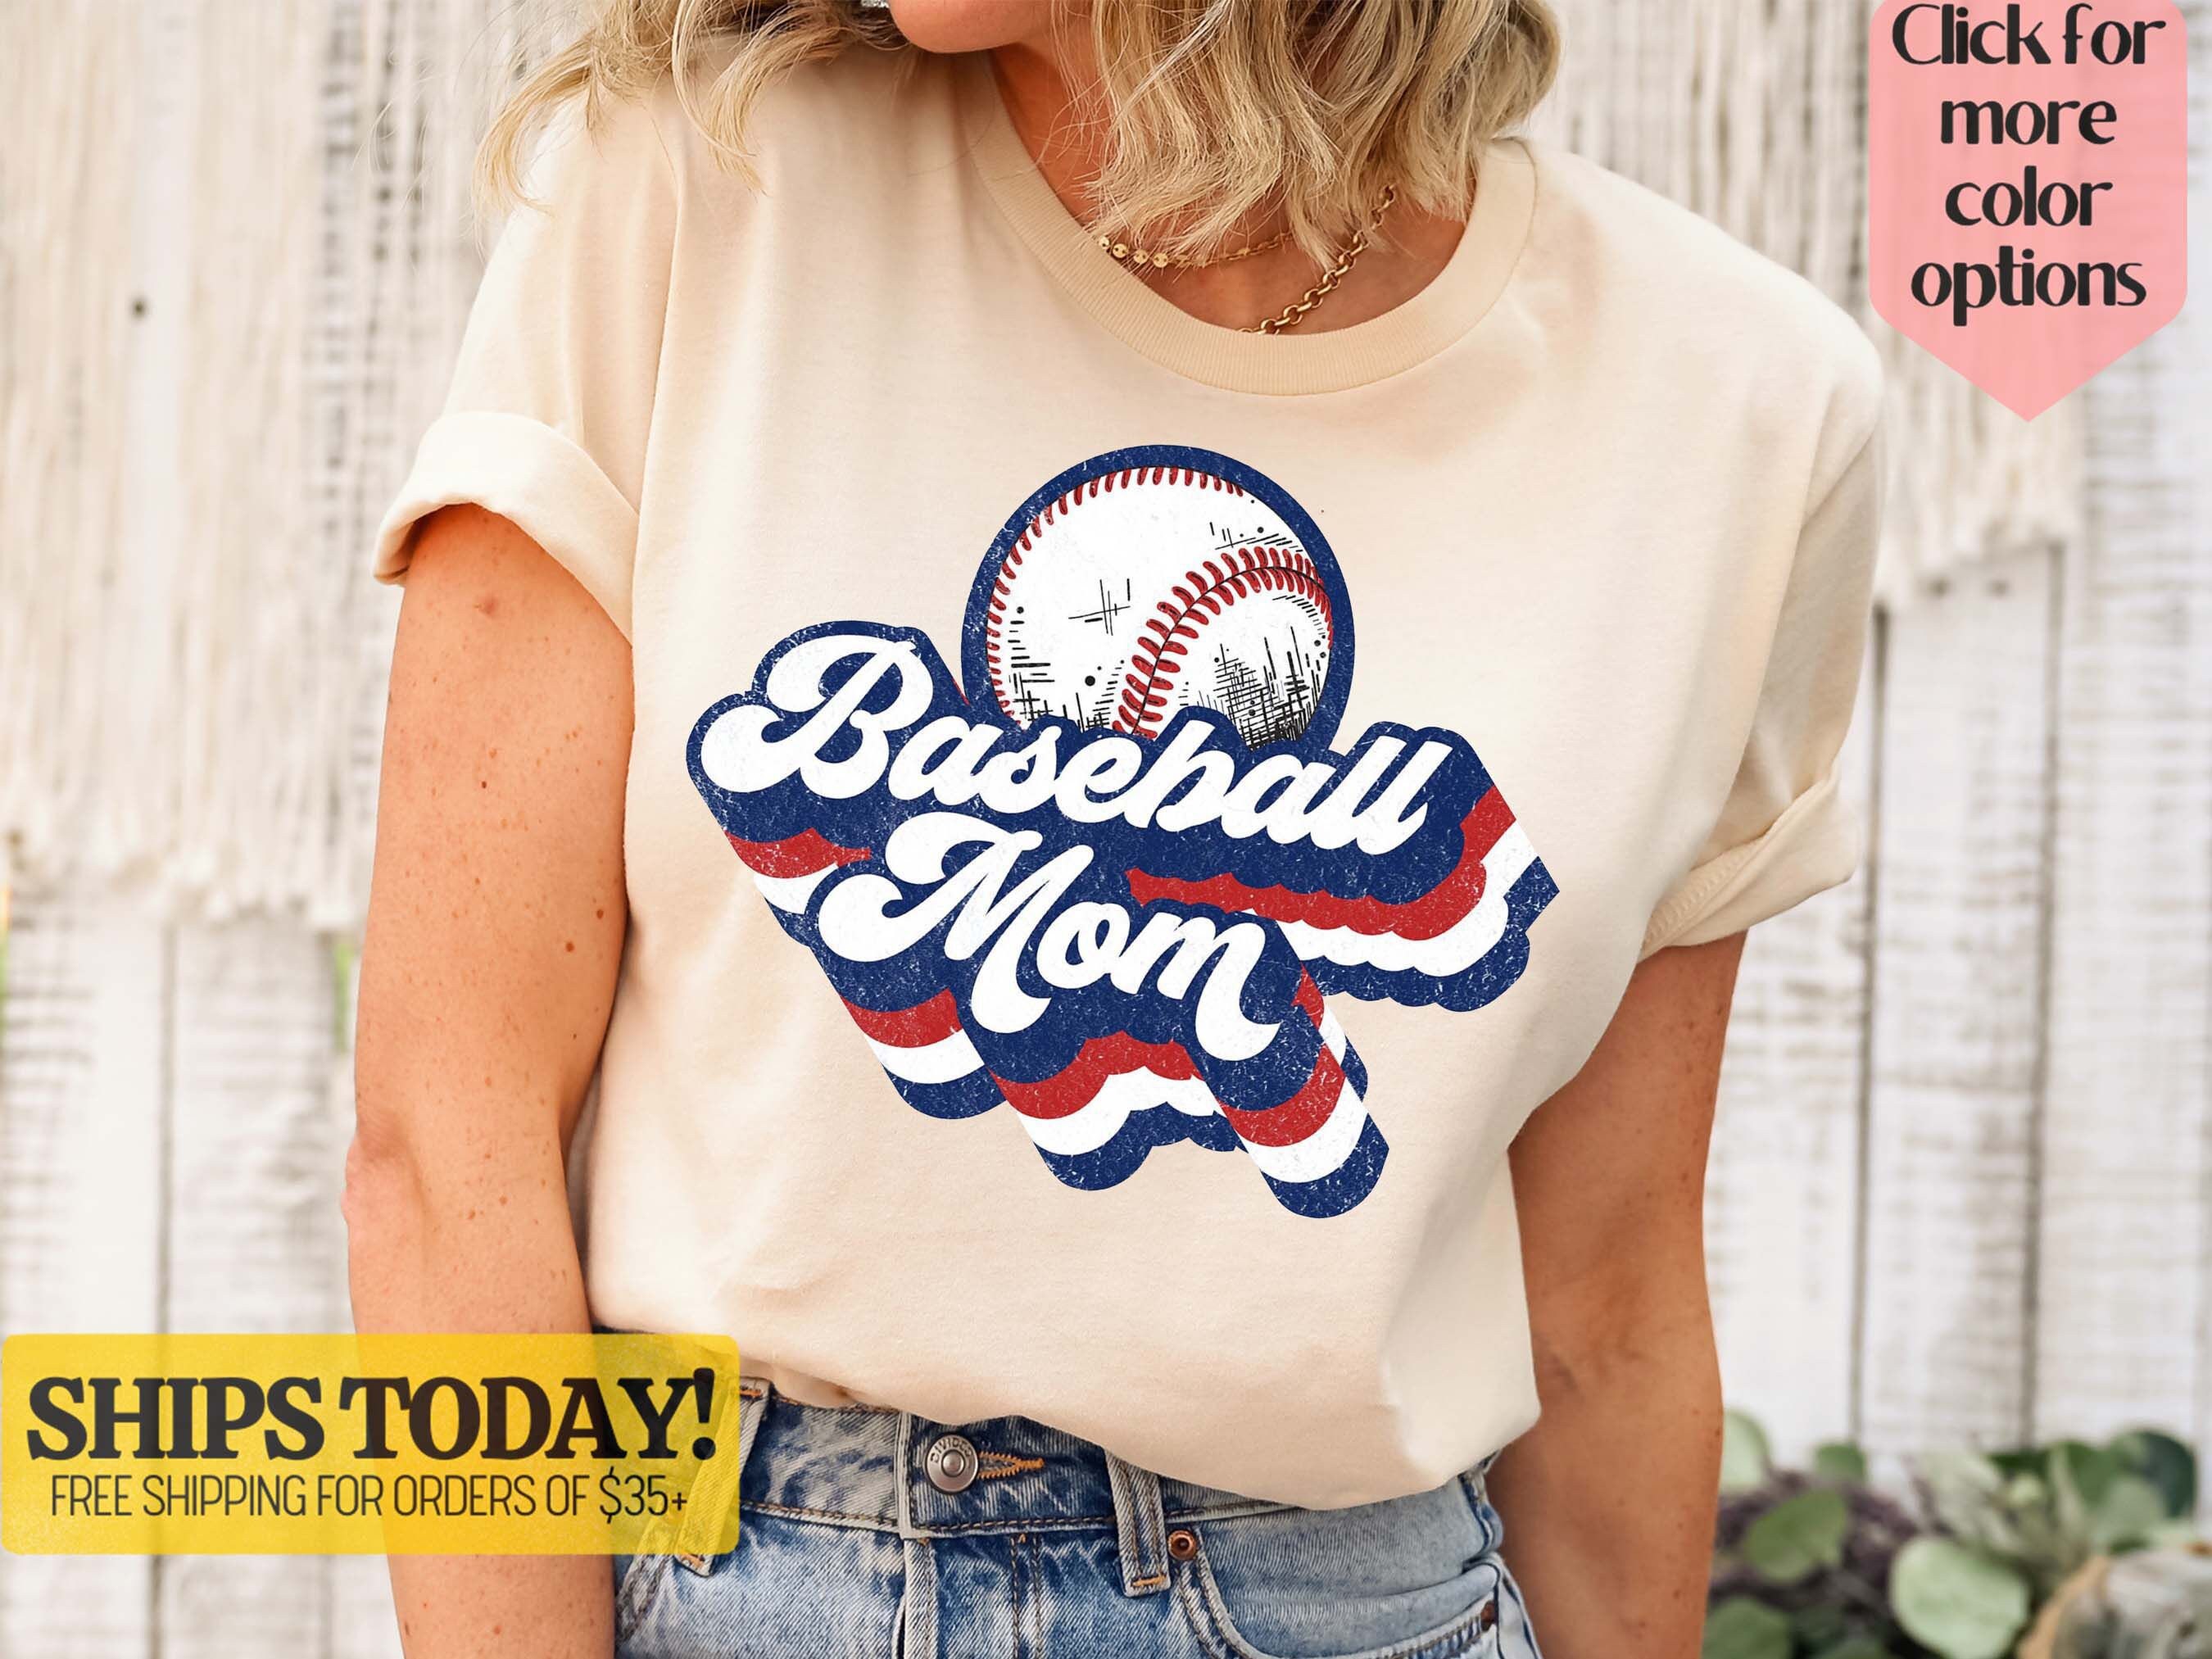 Baseball Vibes Funny Baseball Playing Retro Groovy 70s Style T-Shirt